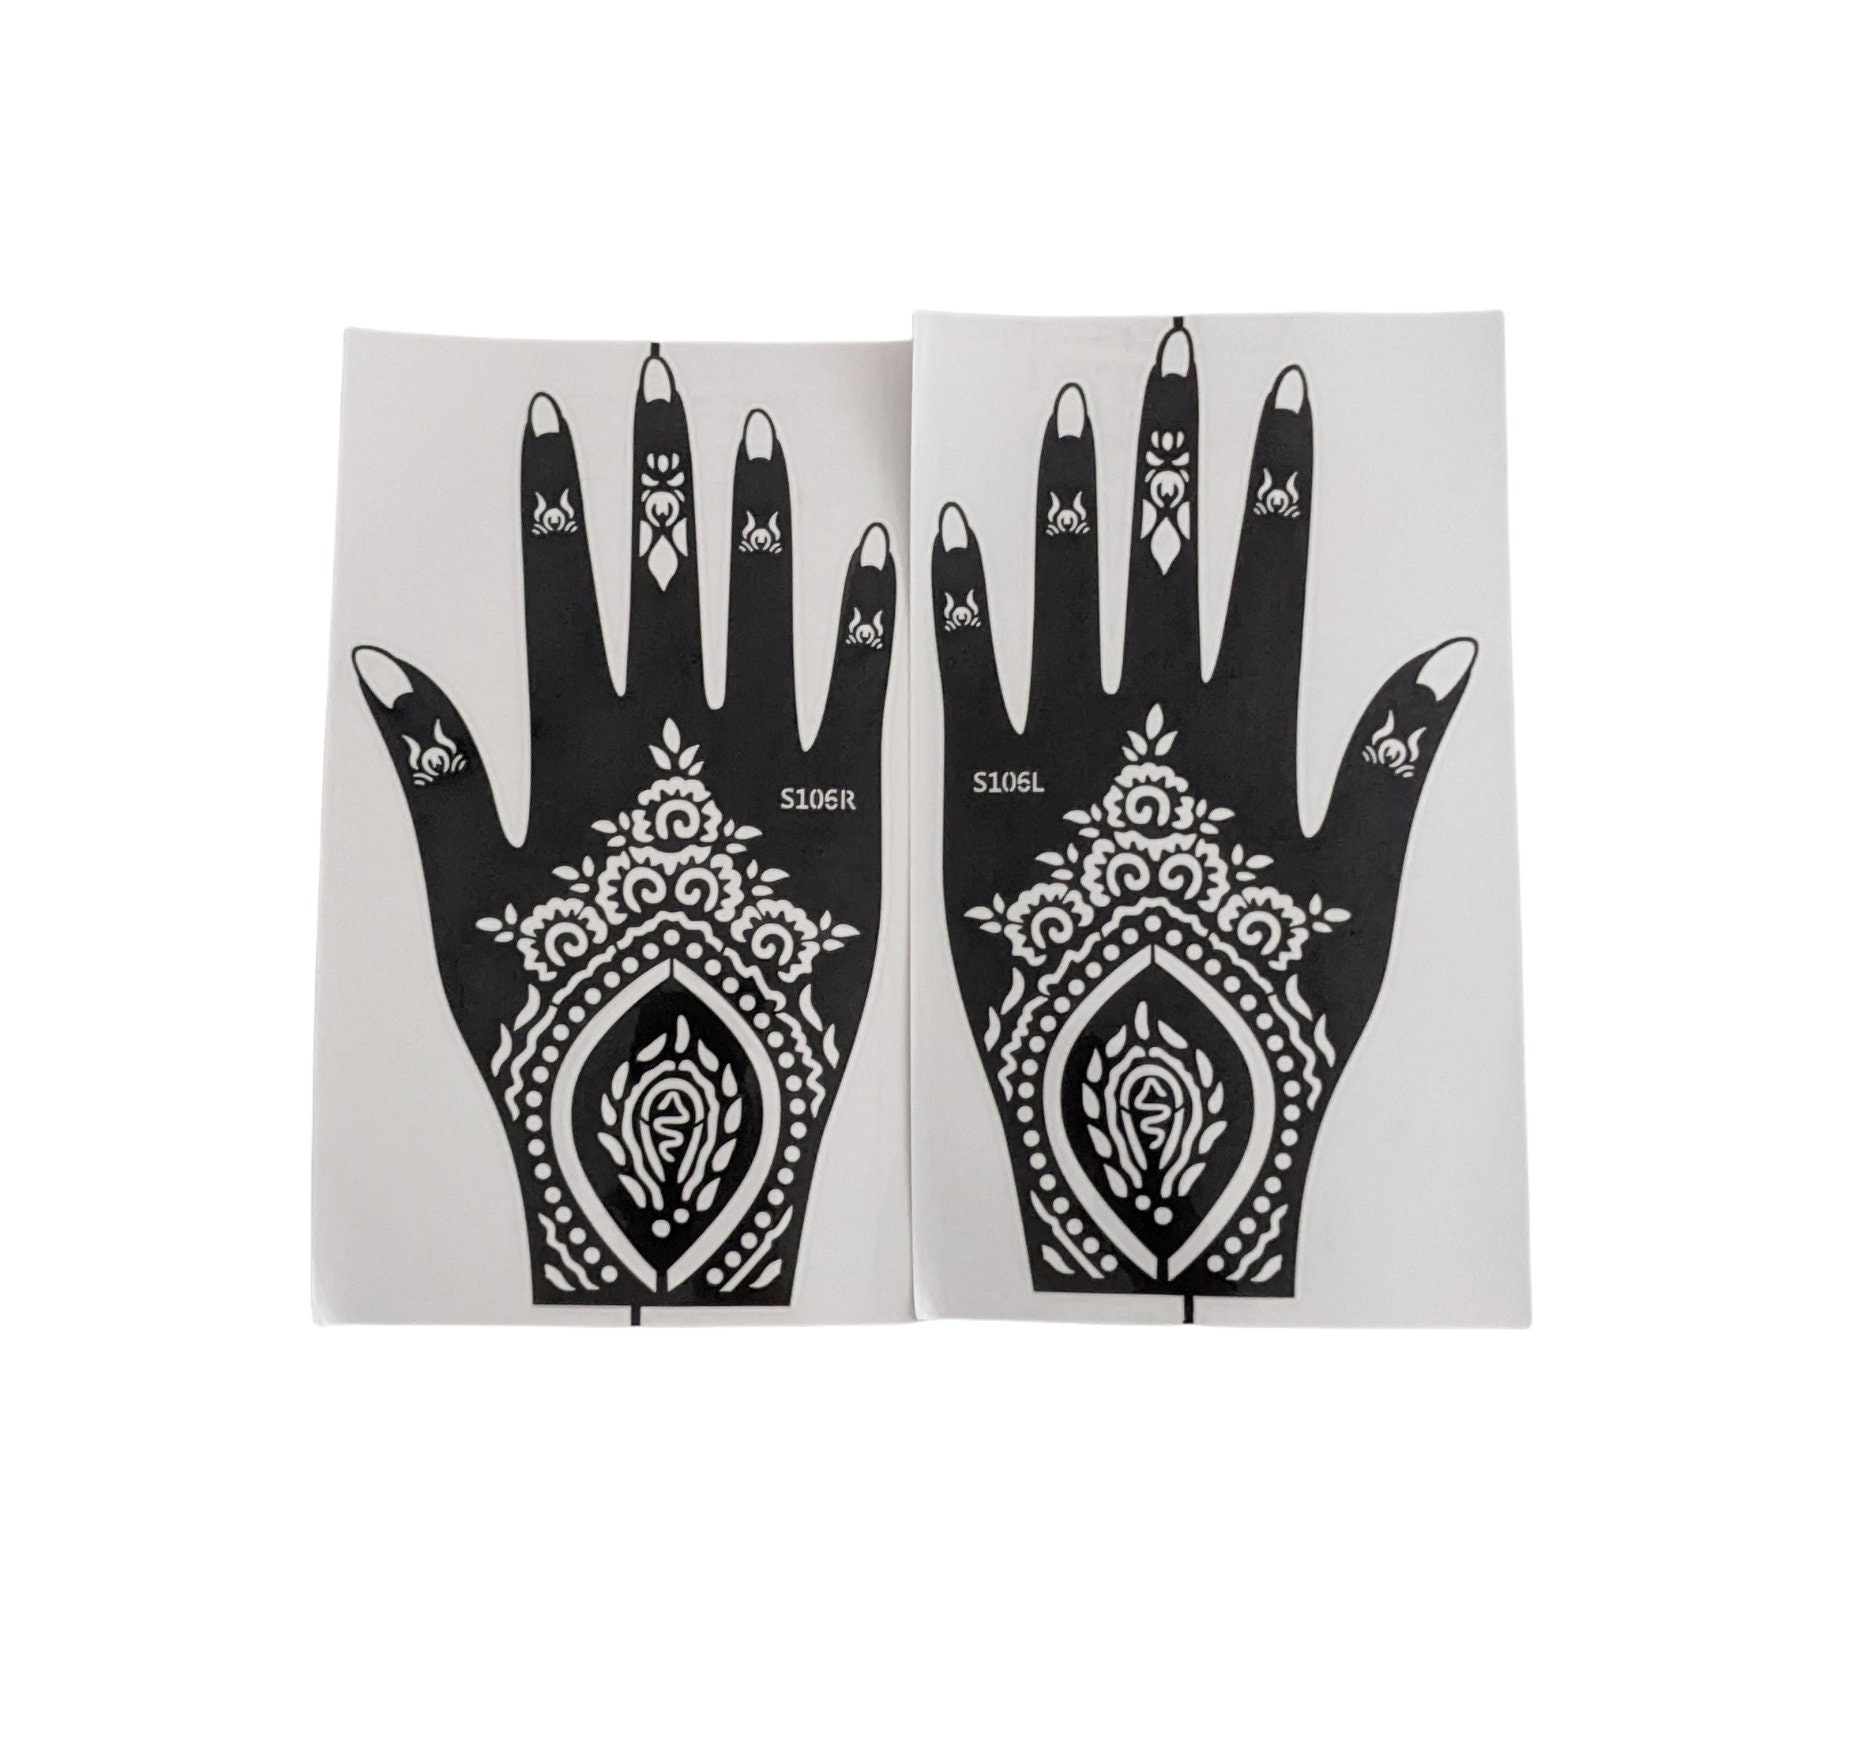  CUTELIILI Henna Tattoo Stencils Reusable for Women